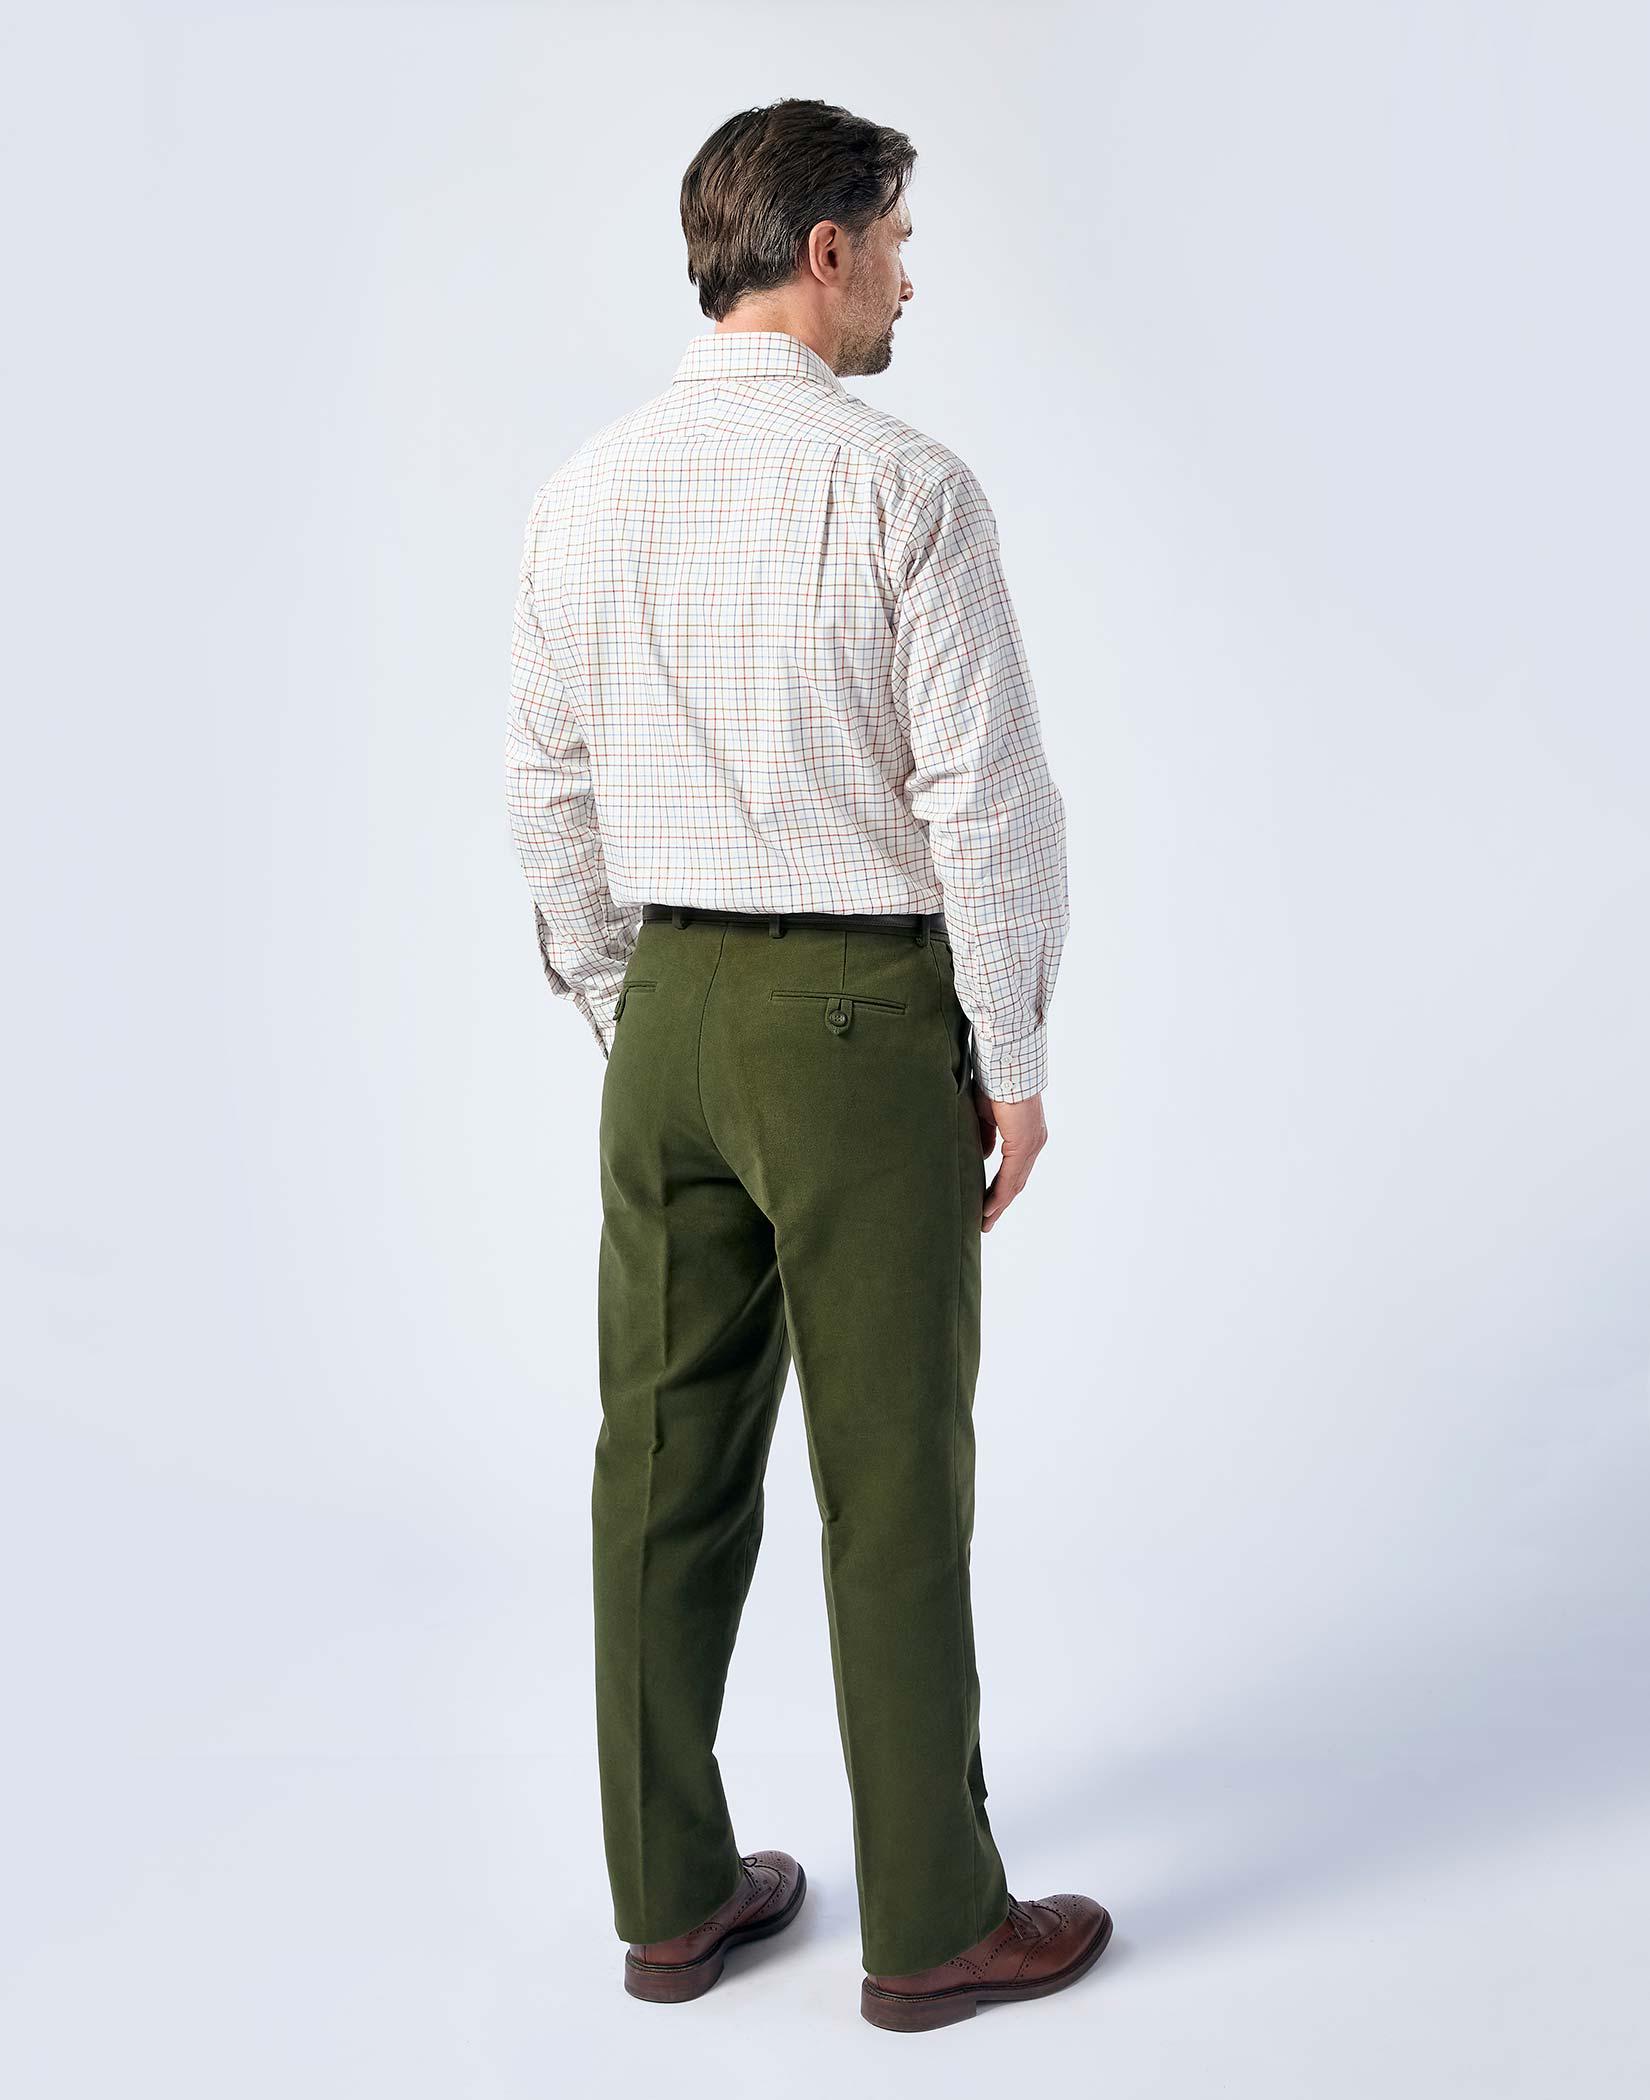 Men Dark Green Trousers  Buy Men Dark Green Trousers online in India